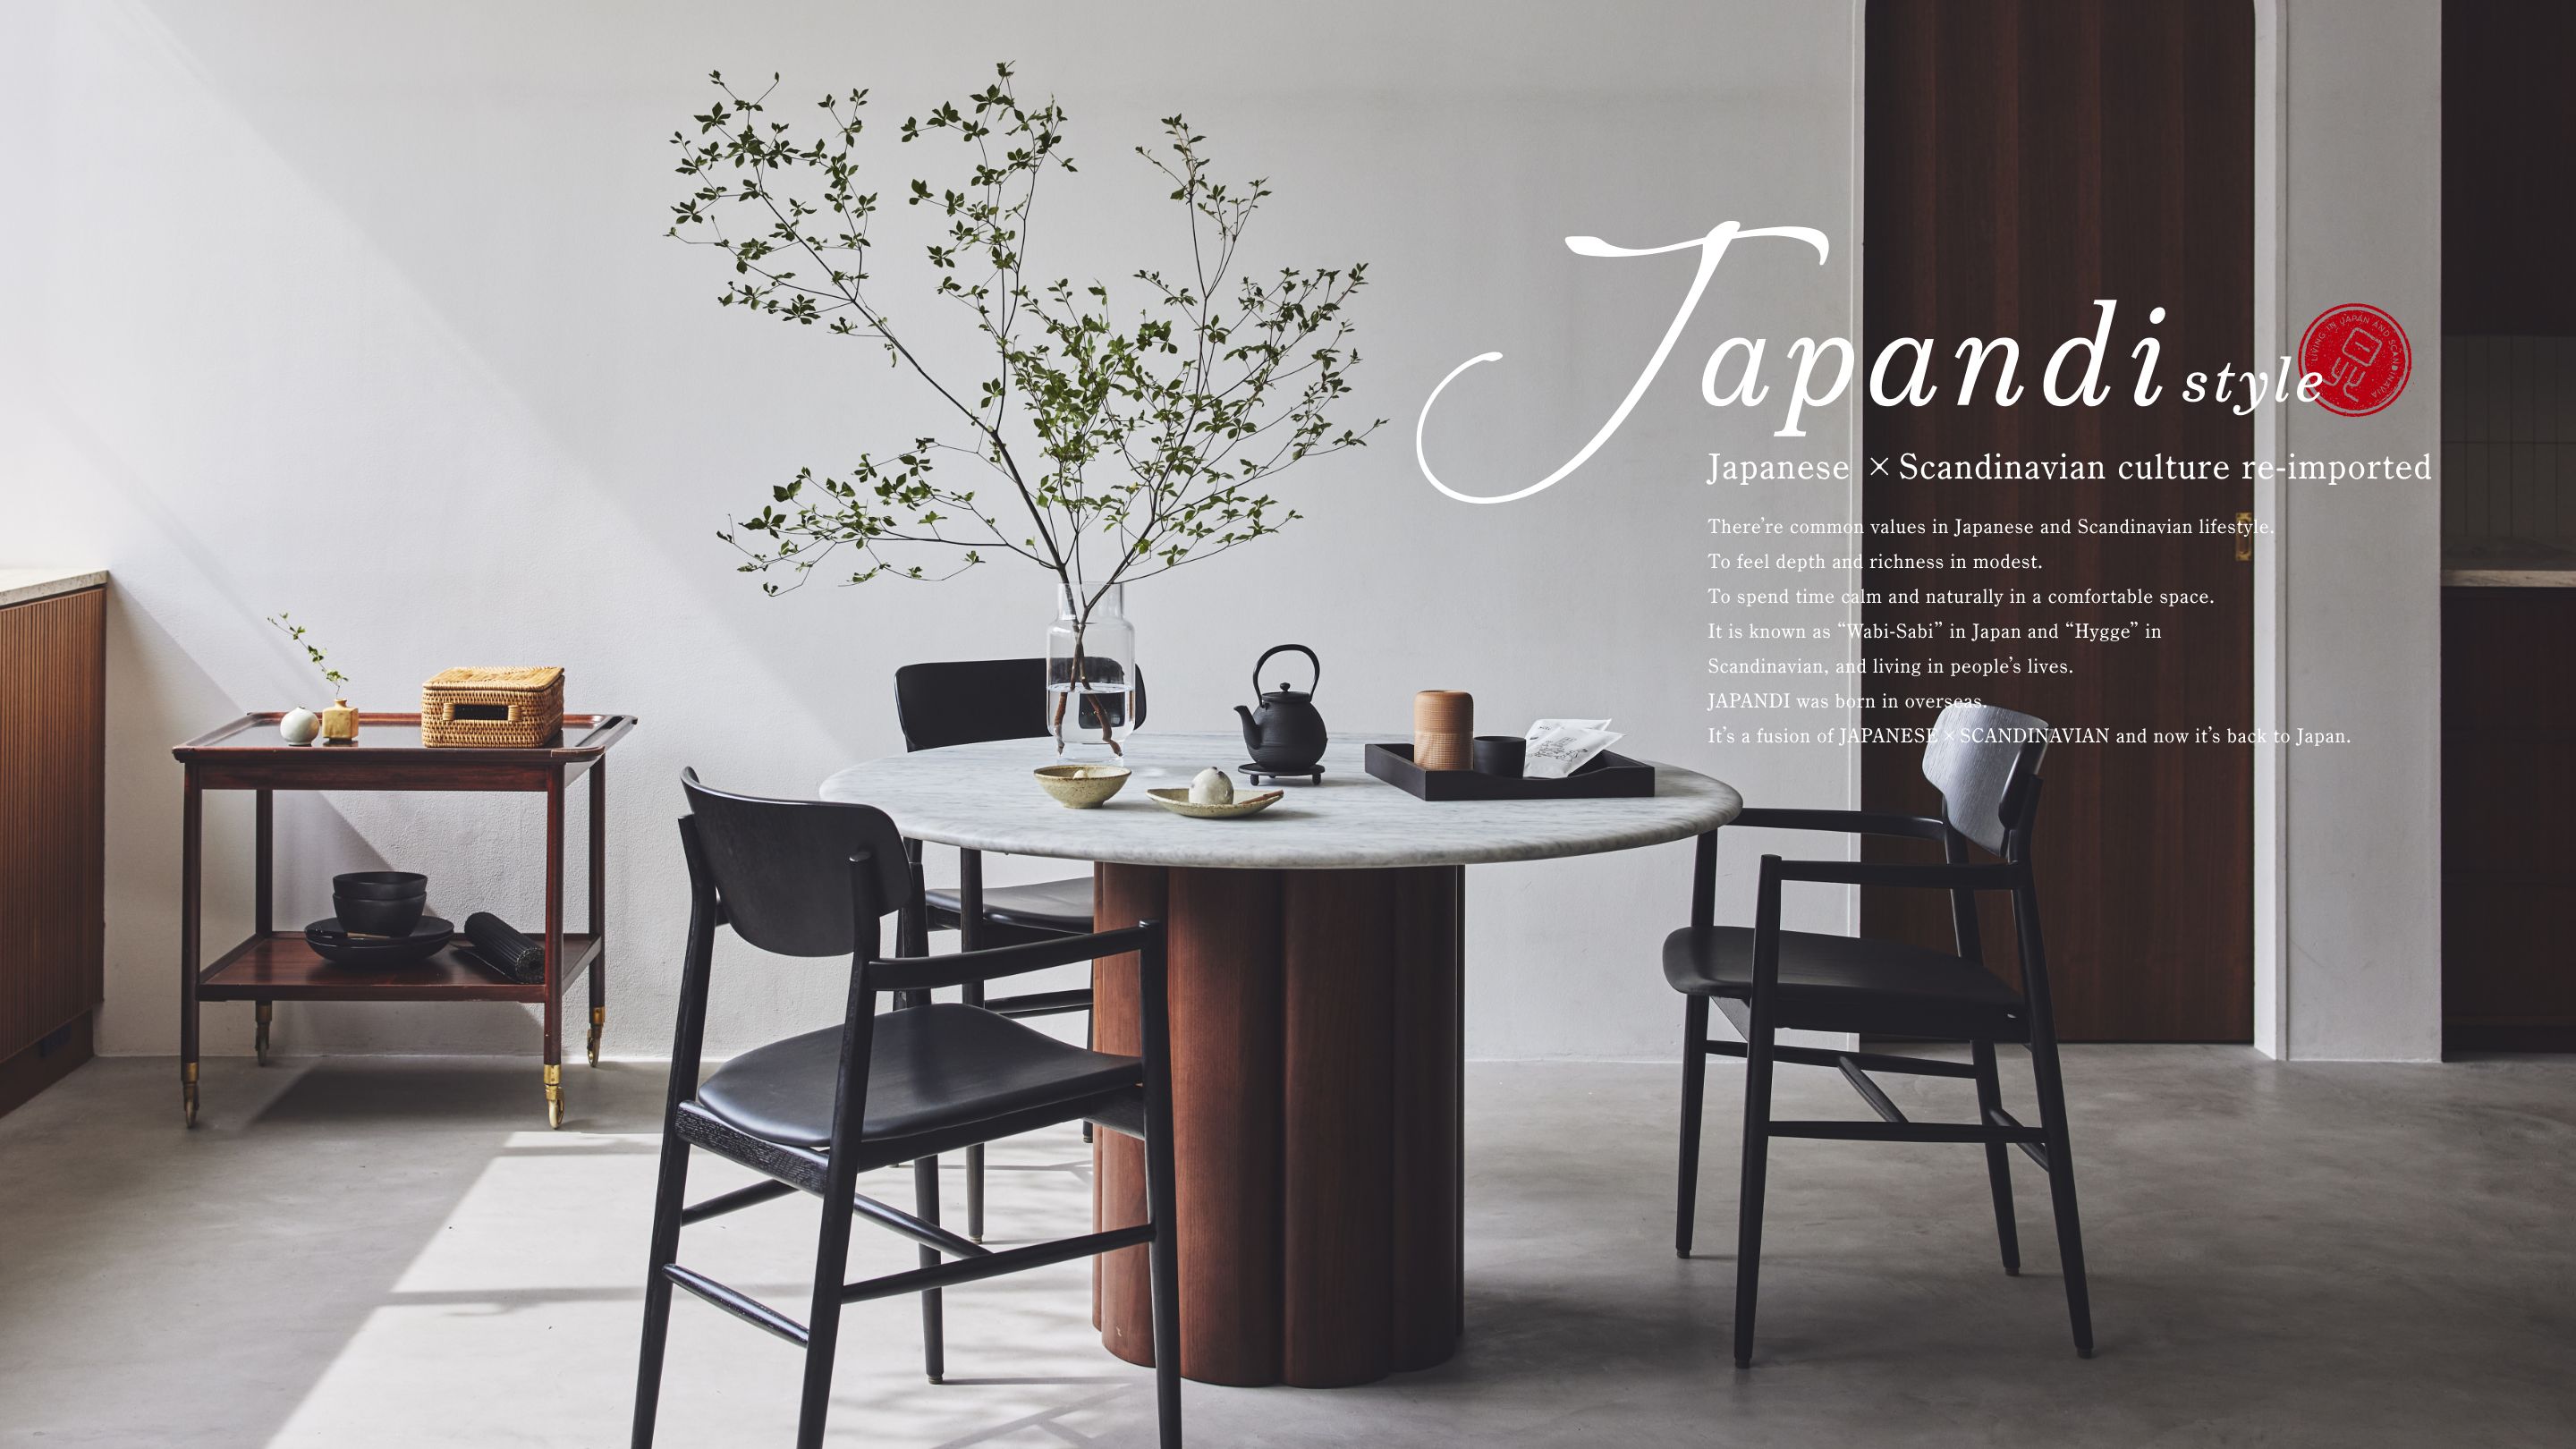 Japandi style Japanese ×Scandinavian culture re-imported